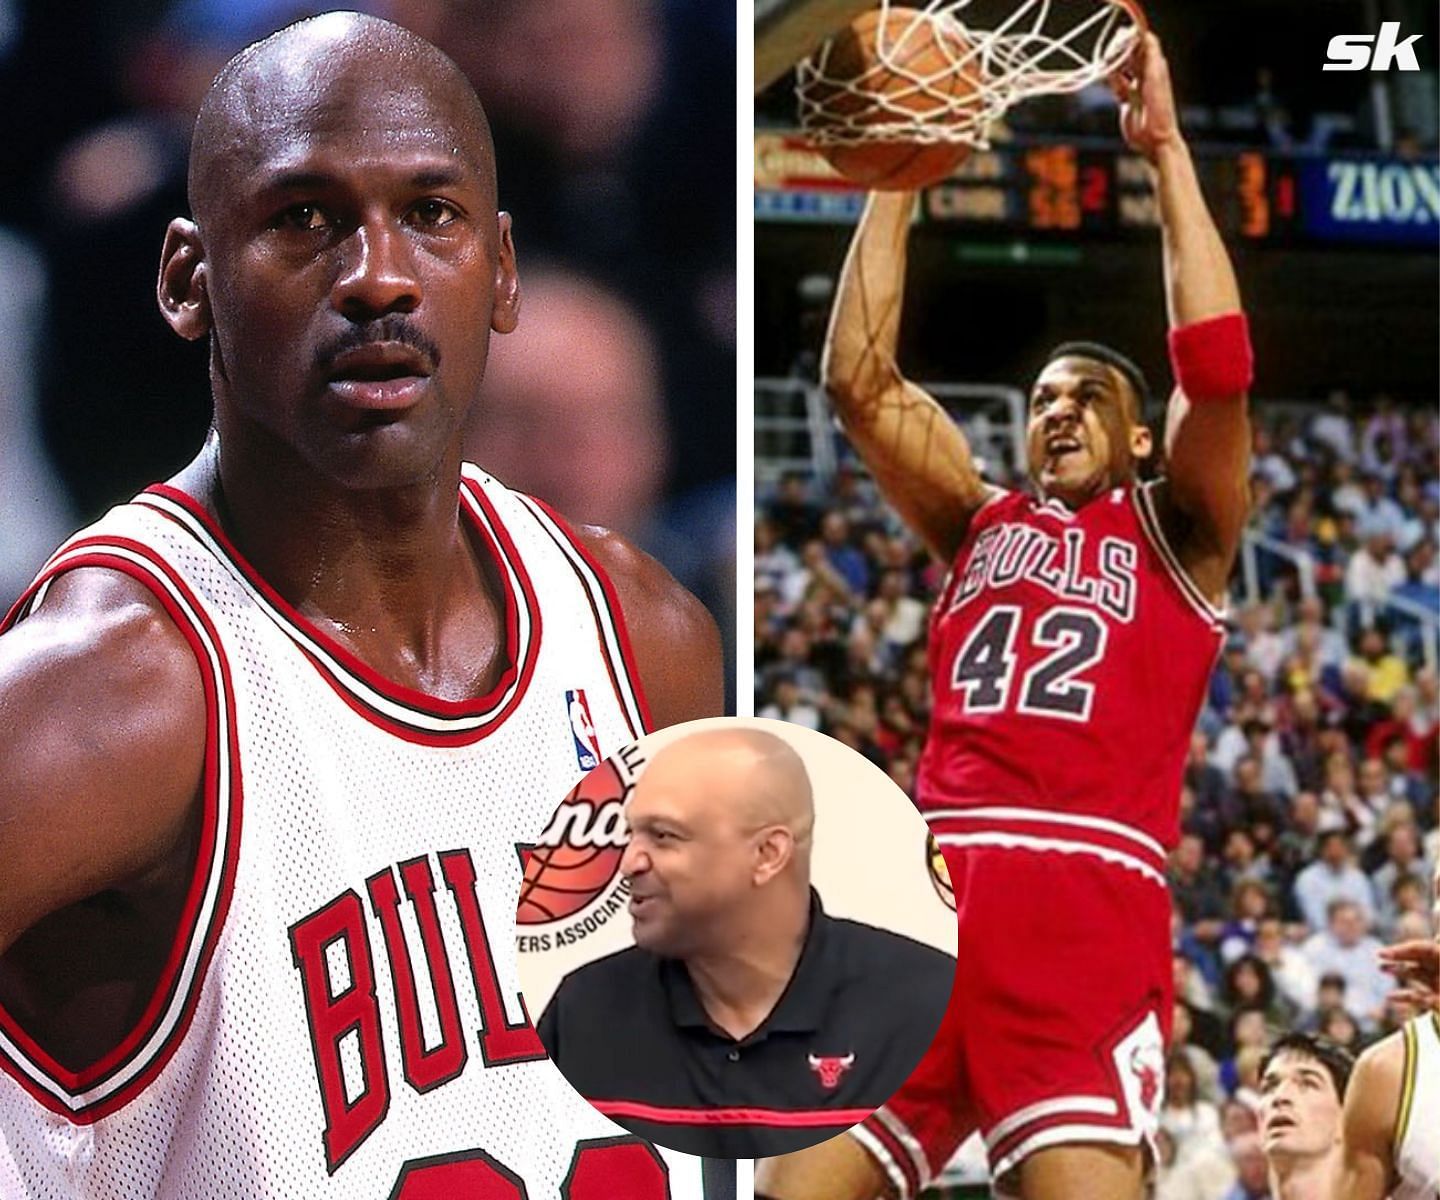 Download Basketball legend Michael Jordan shoots a clutch three